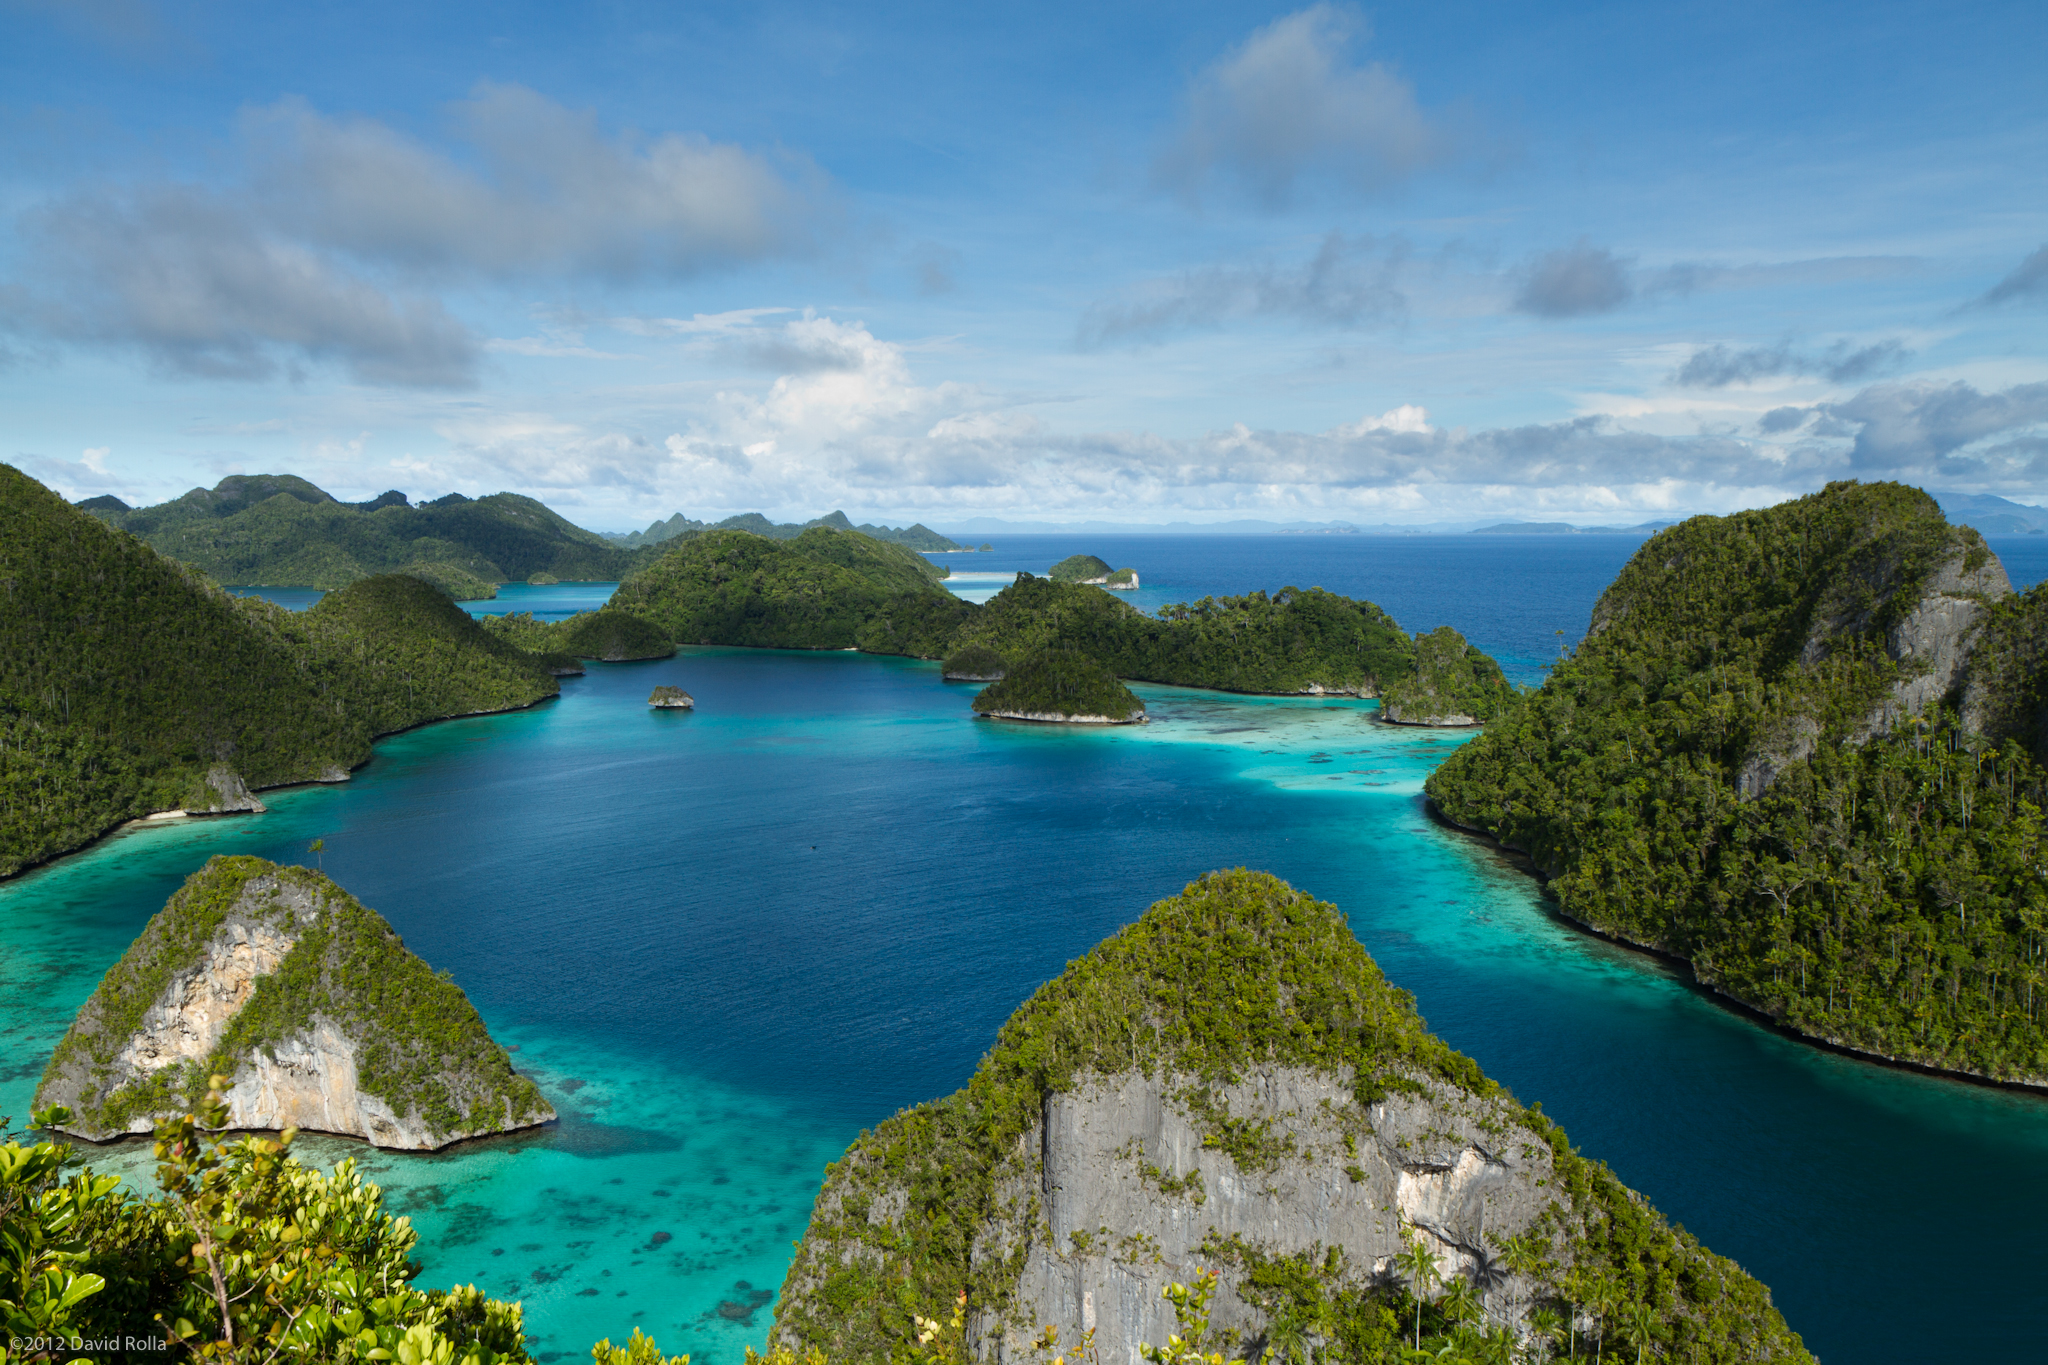 The iconic Wayag islands of Raja Ampat